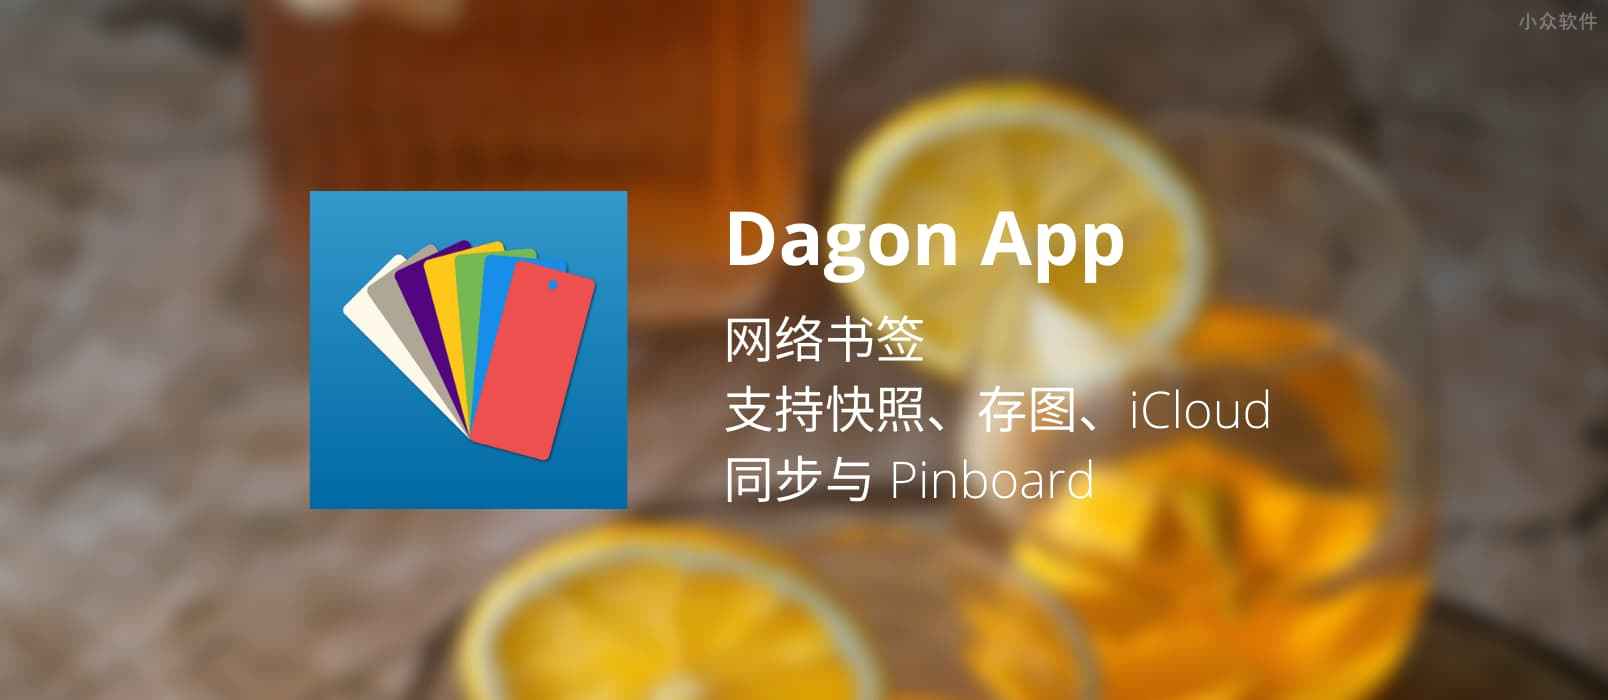 Dagon App - 网络书签，支持快照、存图、iCloud 同步与 Pinboard[iPhone/iPad 限免] 1